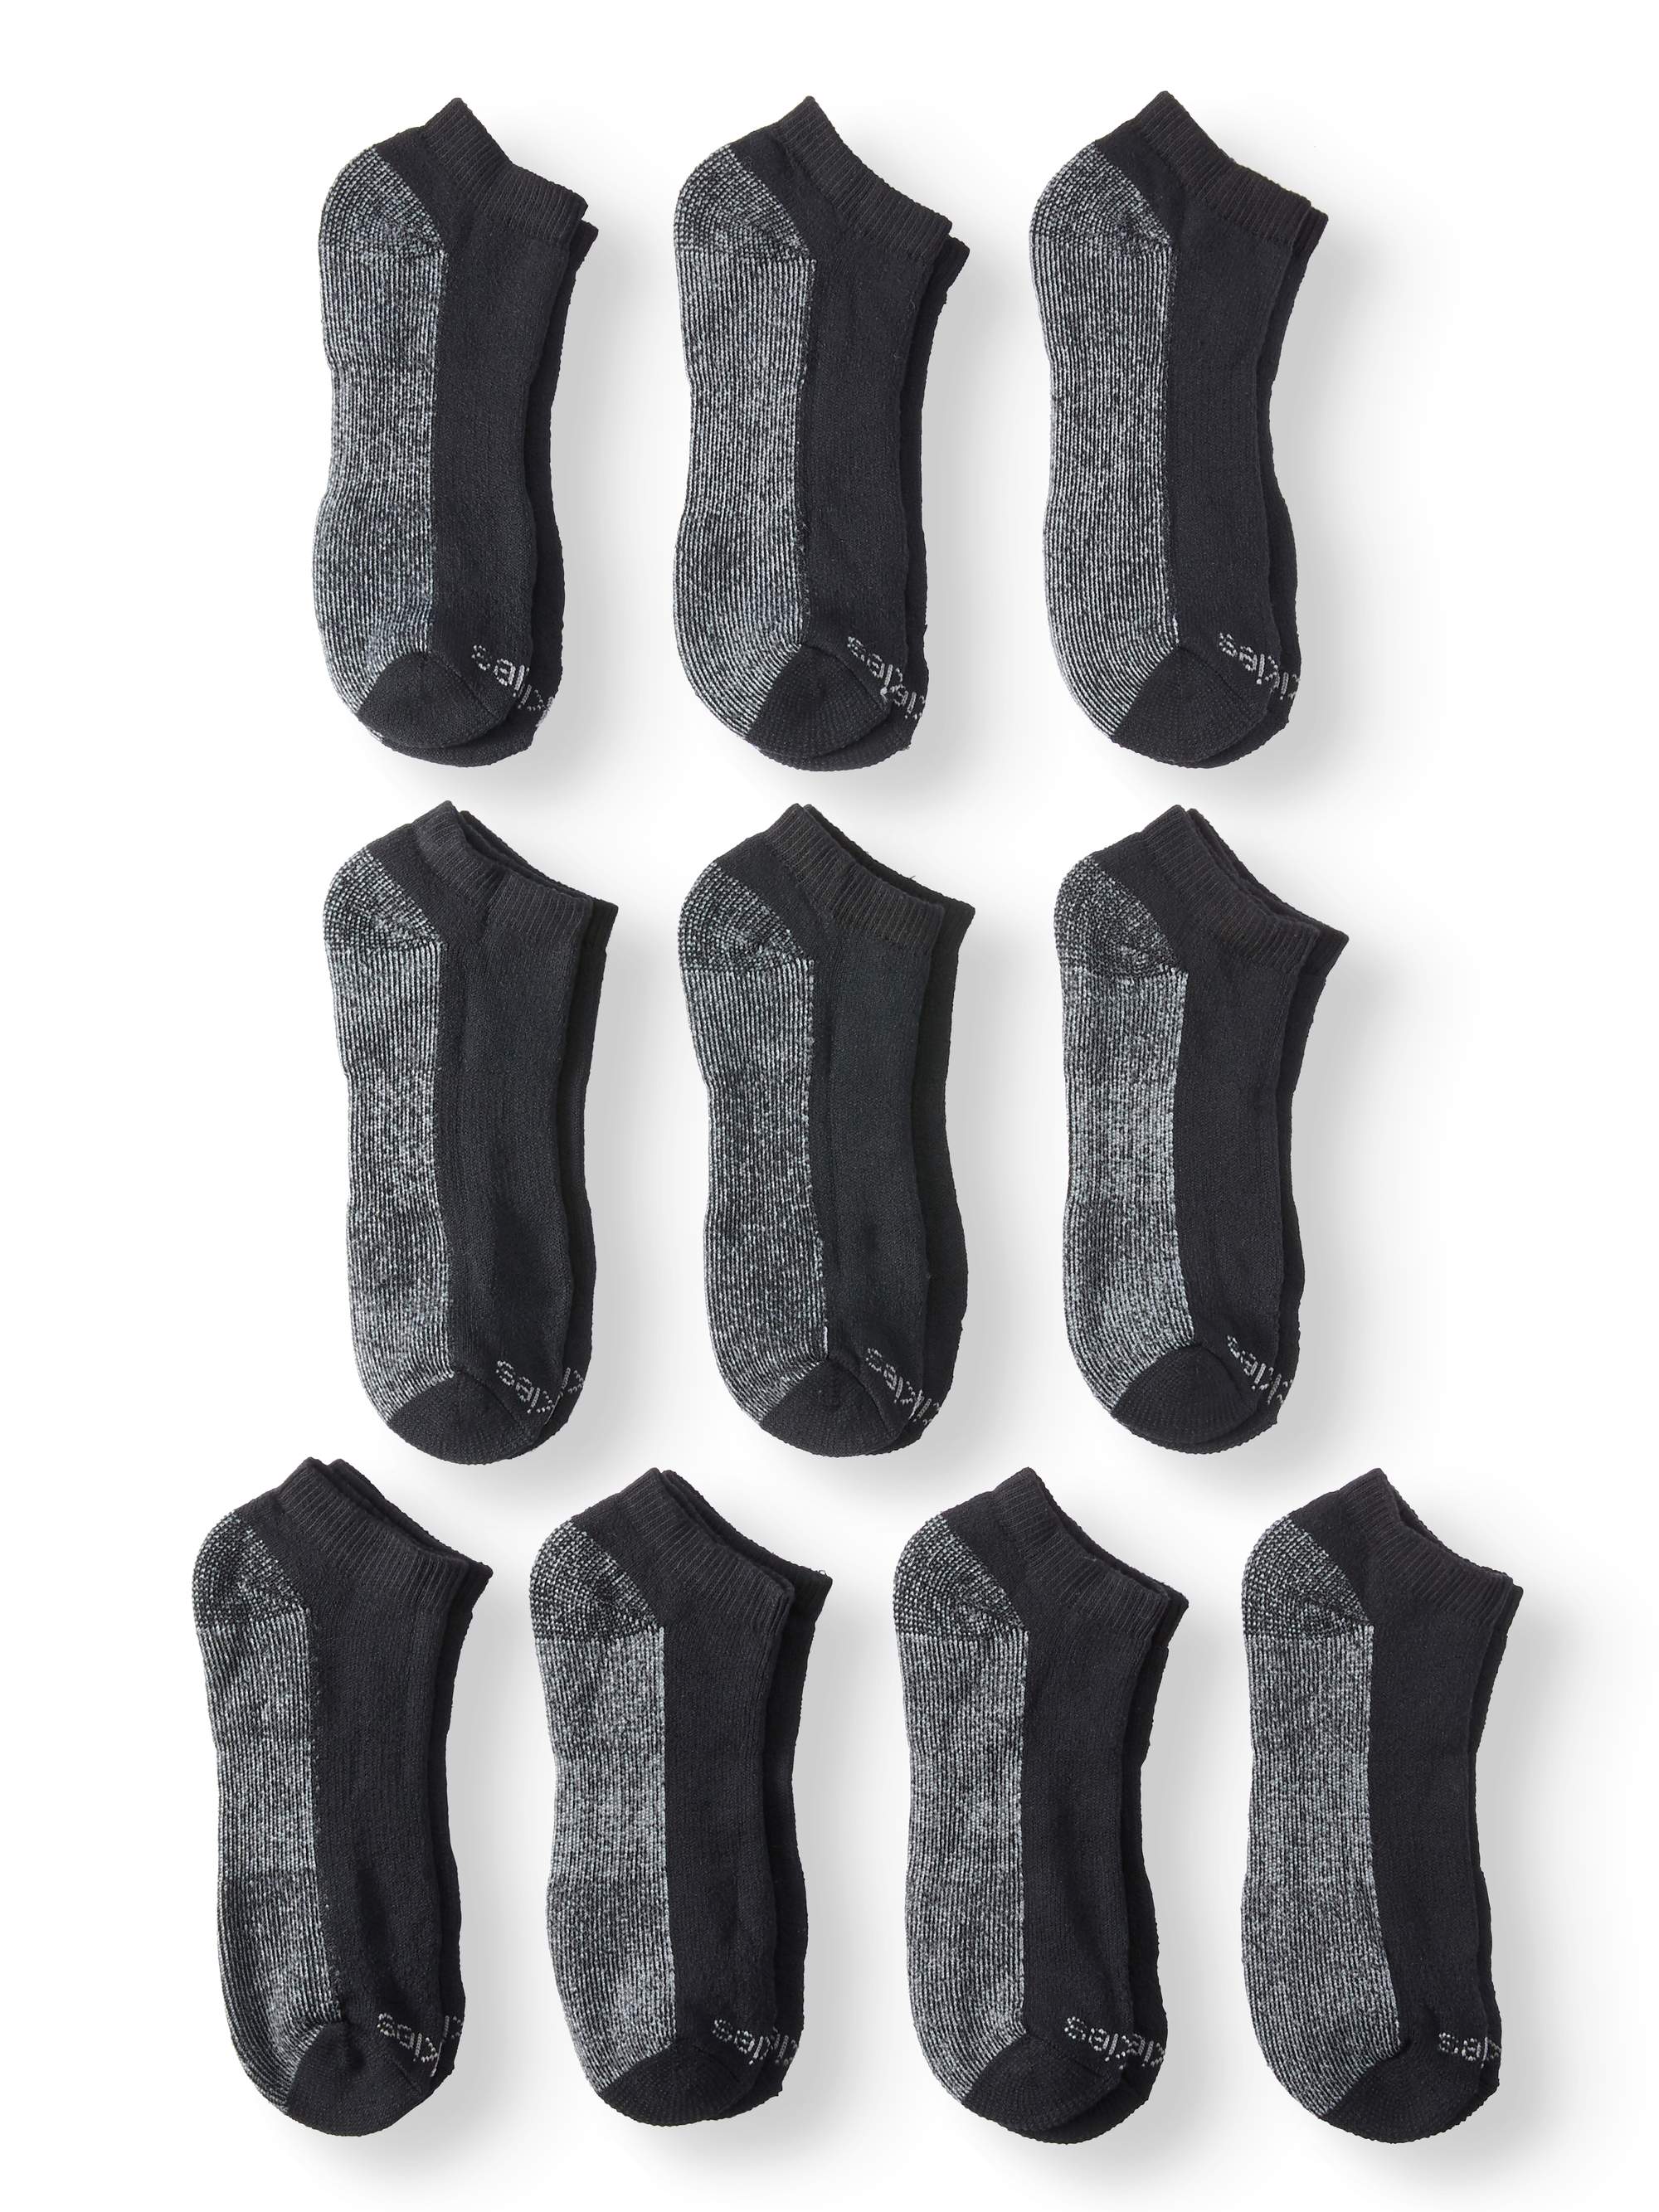 Men's Dri-Tech Comfort No Show Work Socks, 10-Pack - image 1 of 2